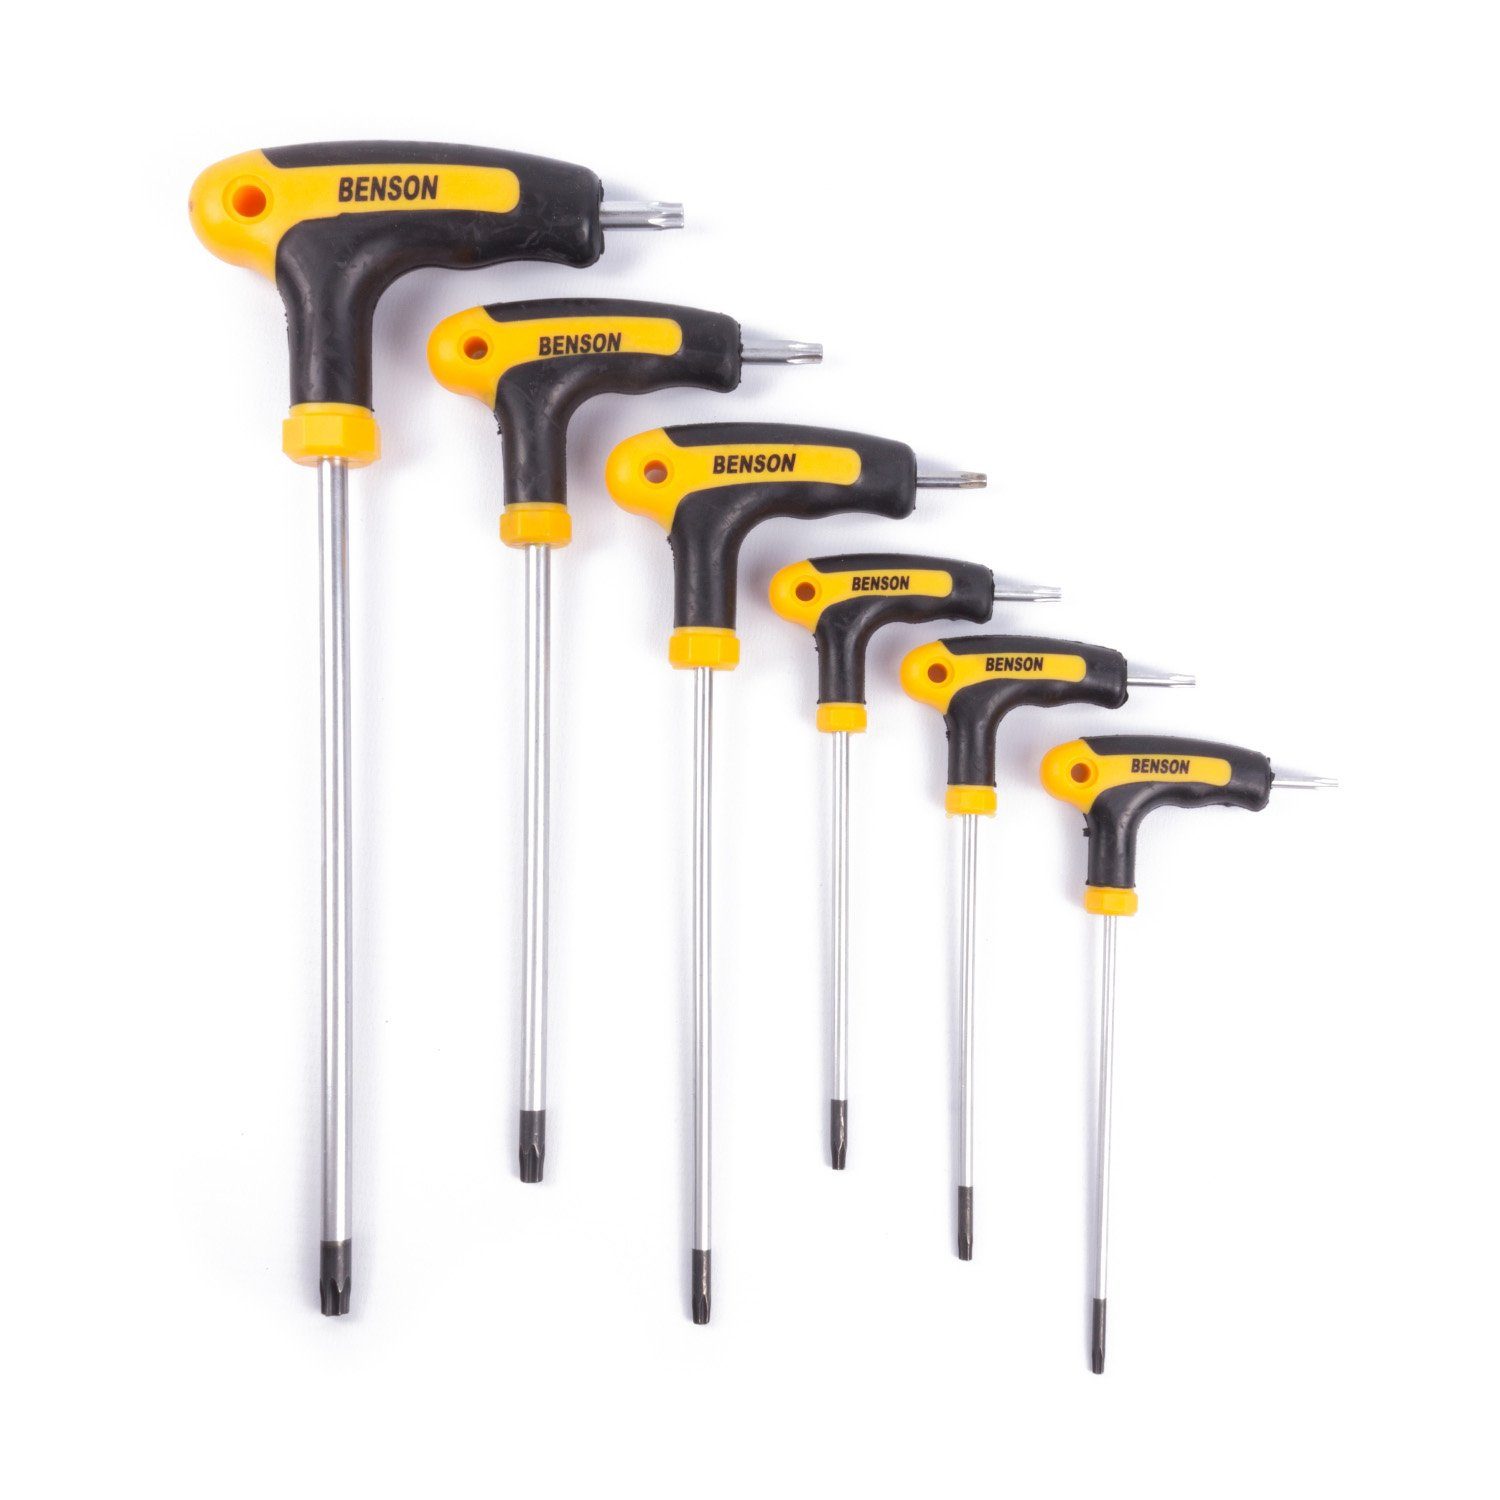 Benson Tools Werkzeugset Torx 6 tlg, (Schraubenwerkzeug, 6-St., Werkzeug Set), Torx-Schraubendrehersatz